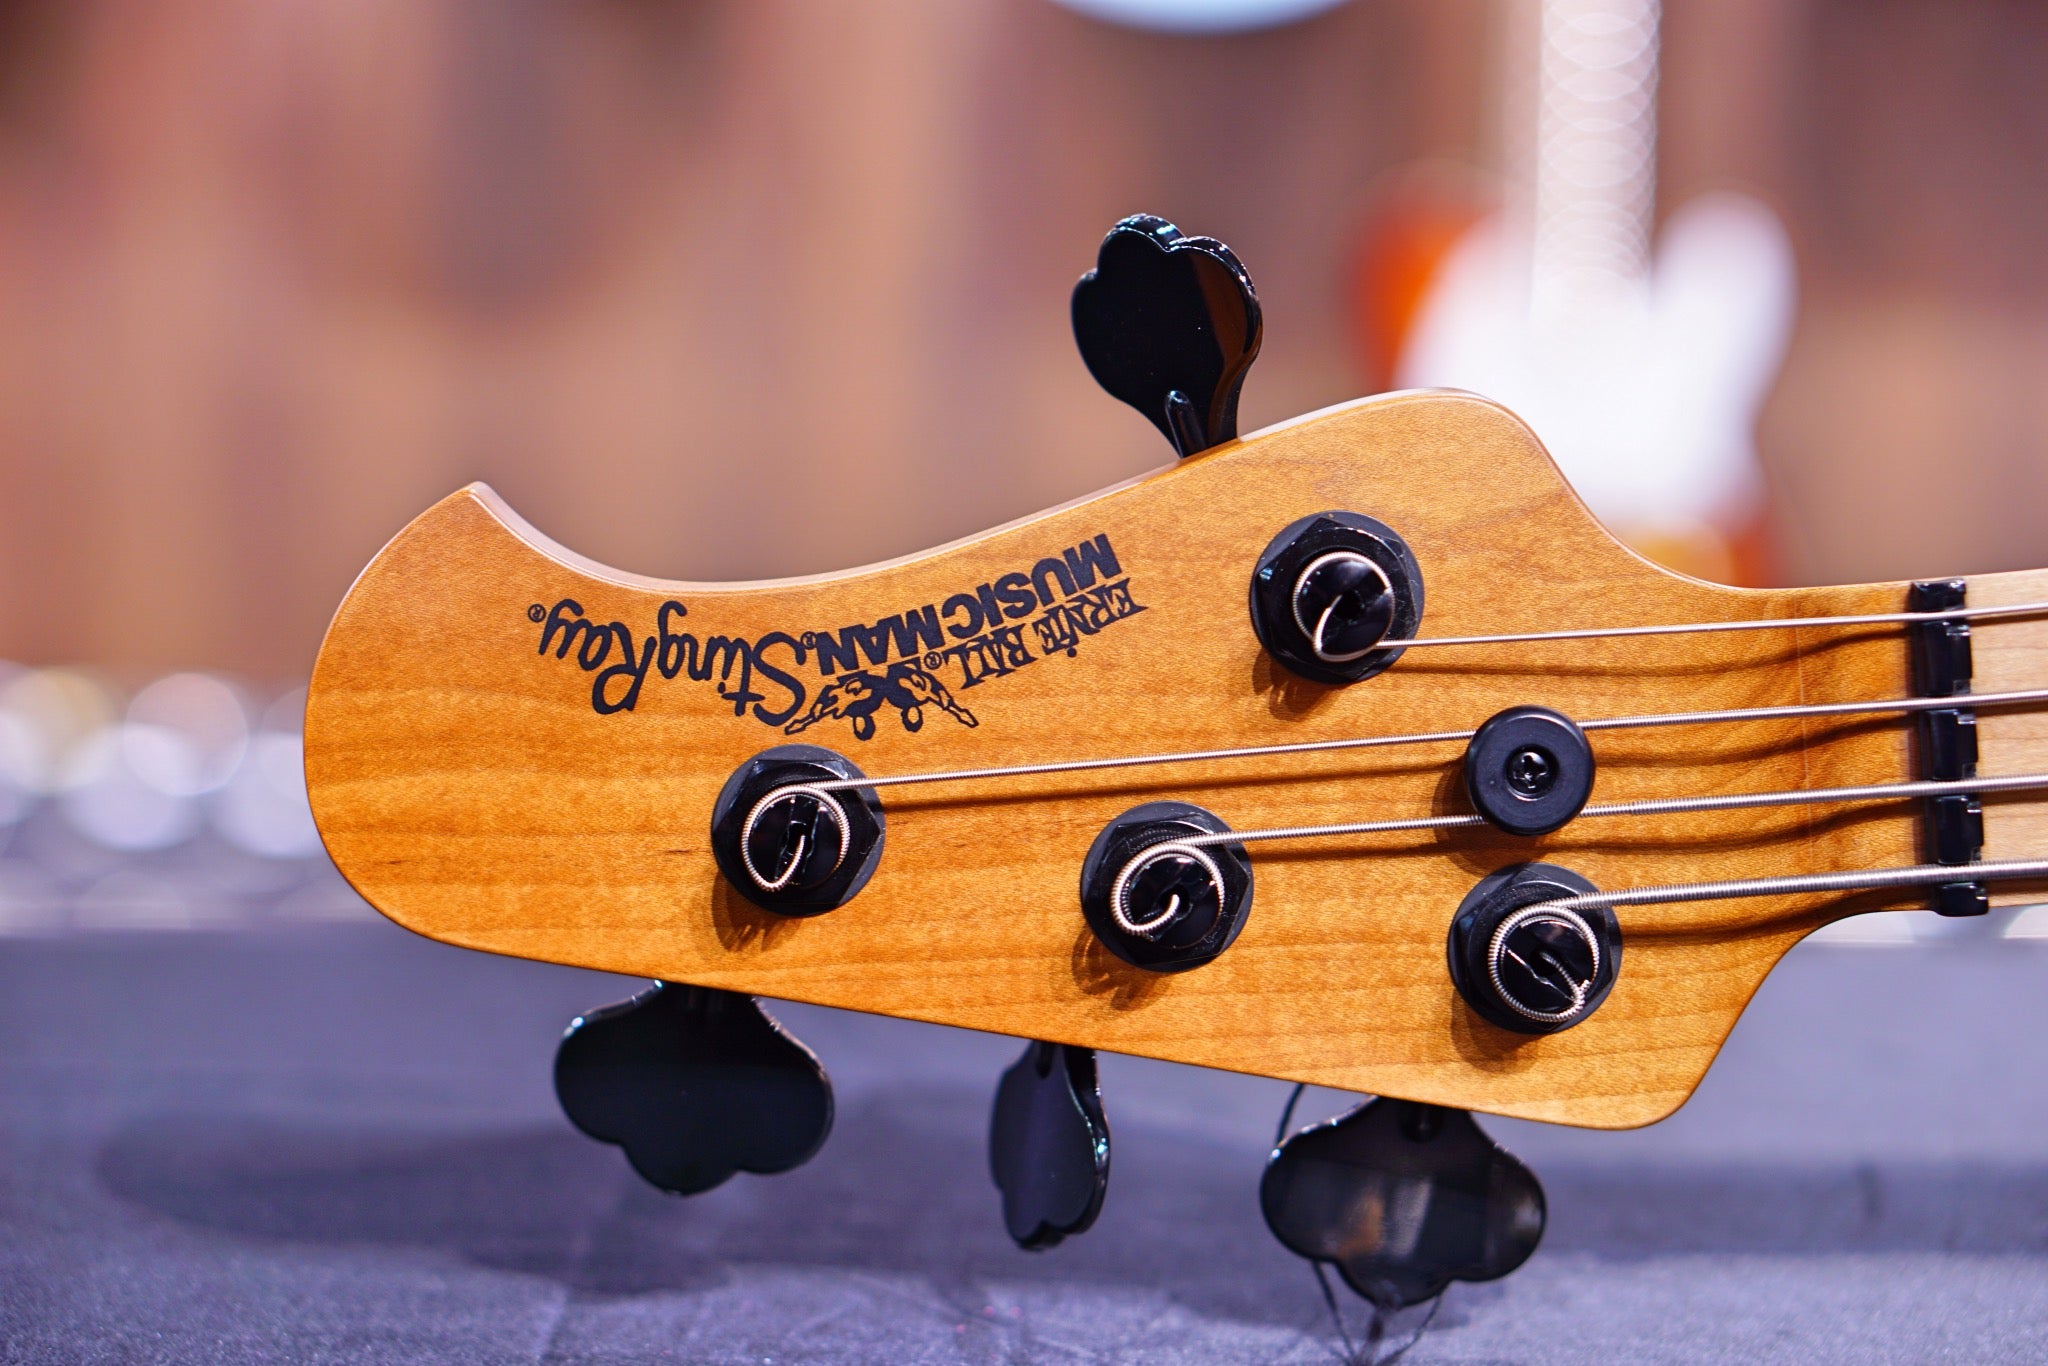 Ernie Ball Music Man StingRay Special 4 Bass Guitar - Black with Maple Fingerboard  f98004 - HIENDGUITAR   Musicman bass